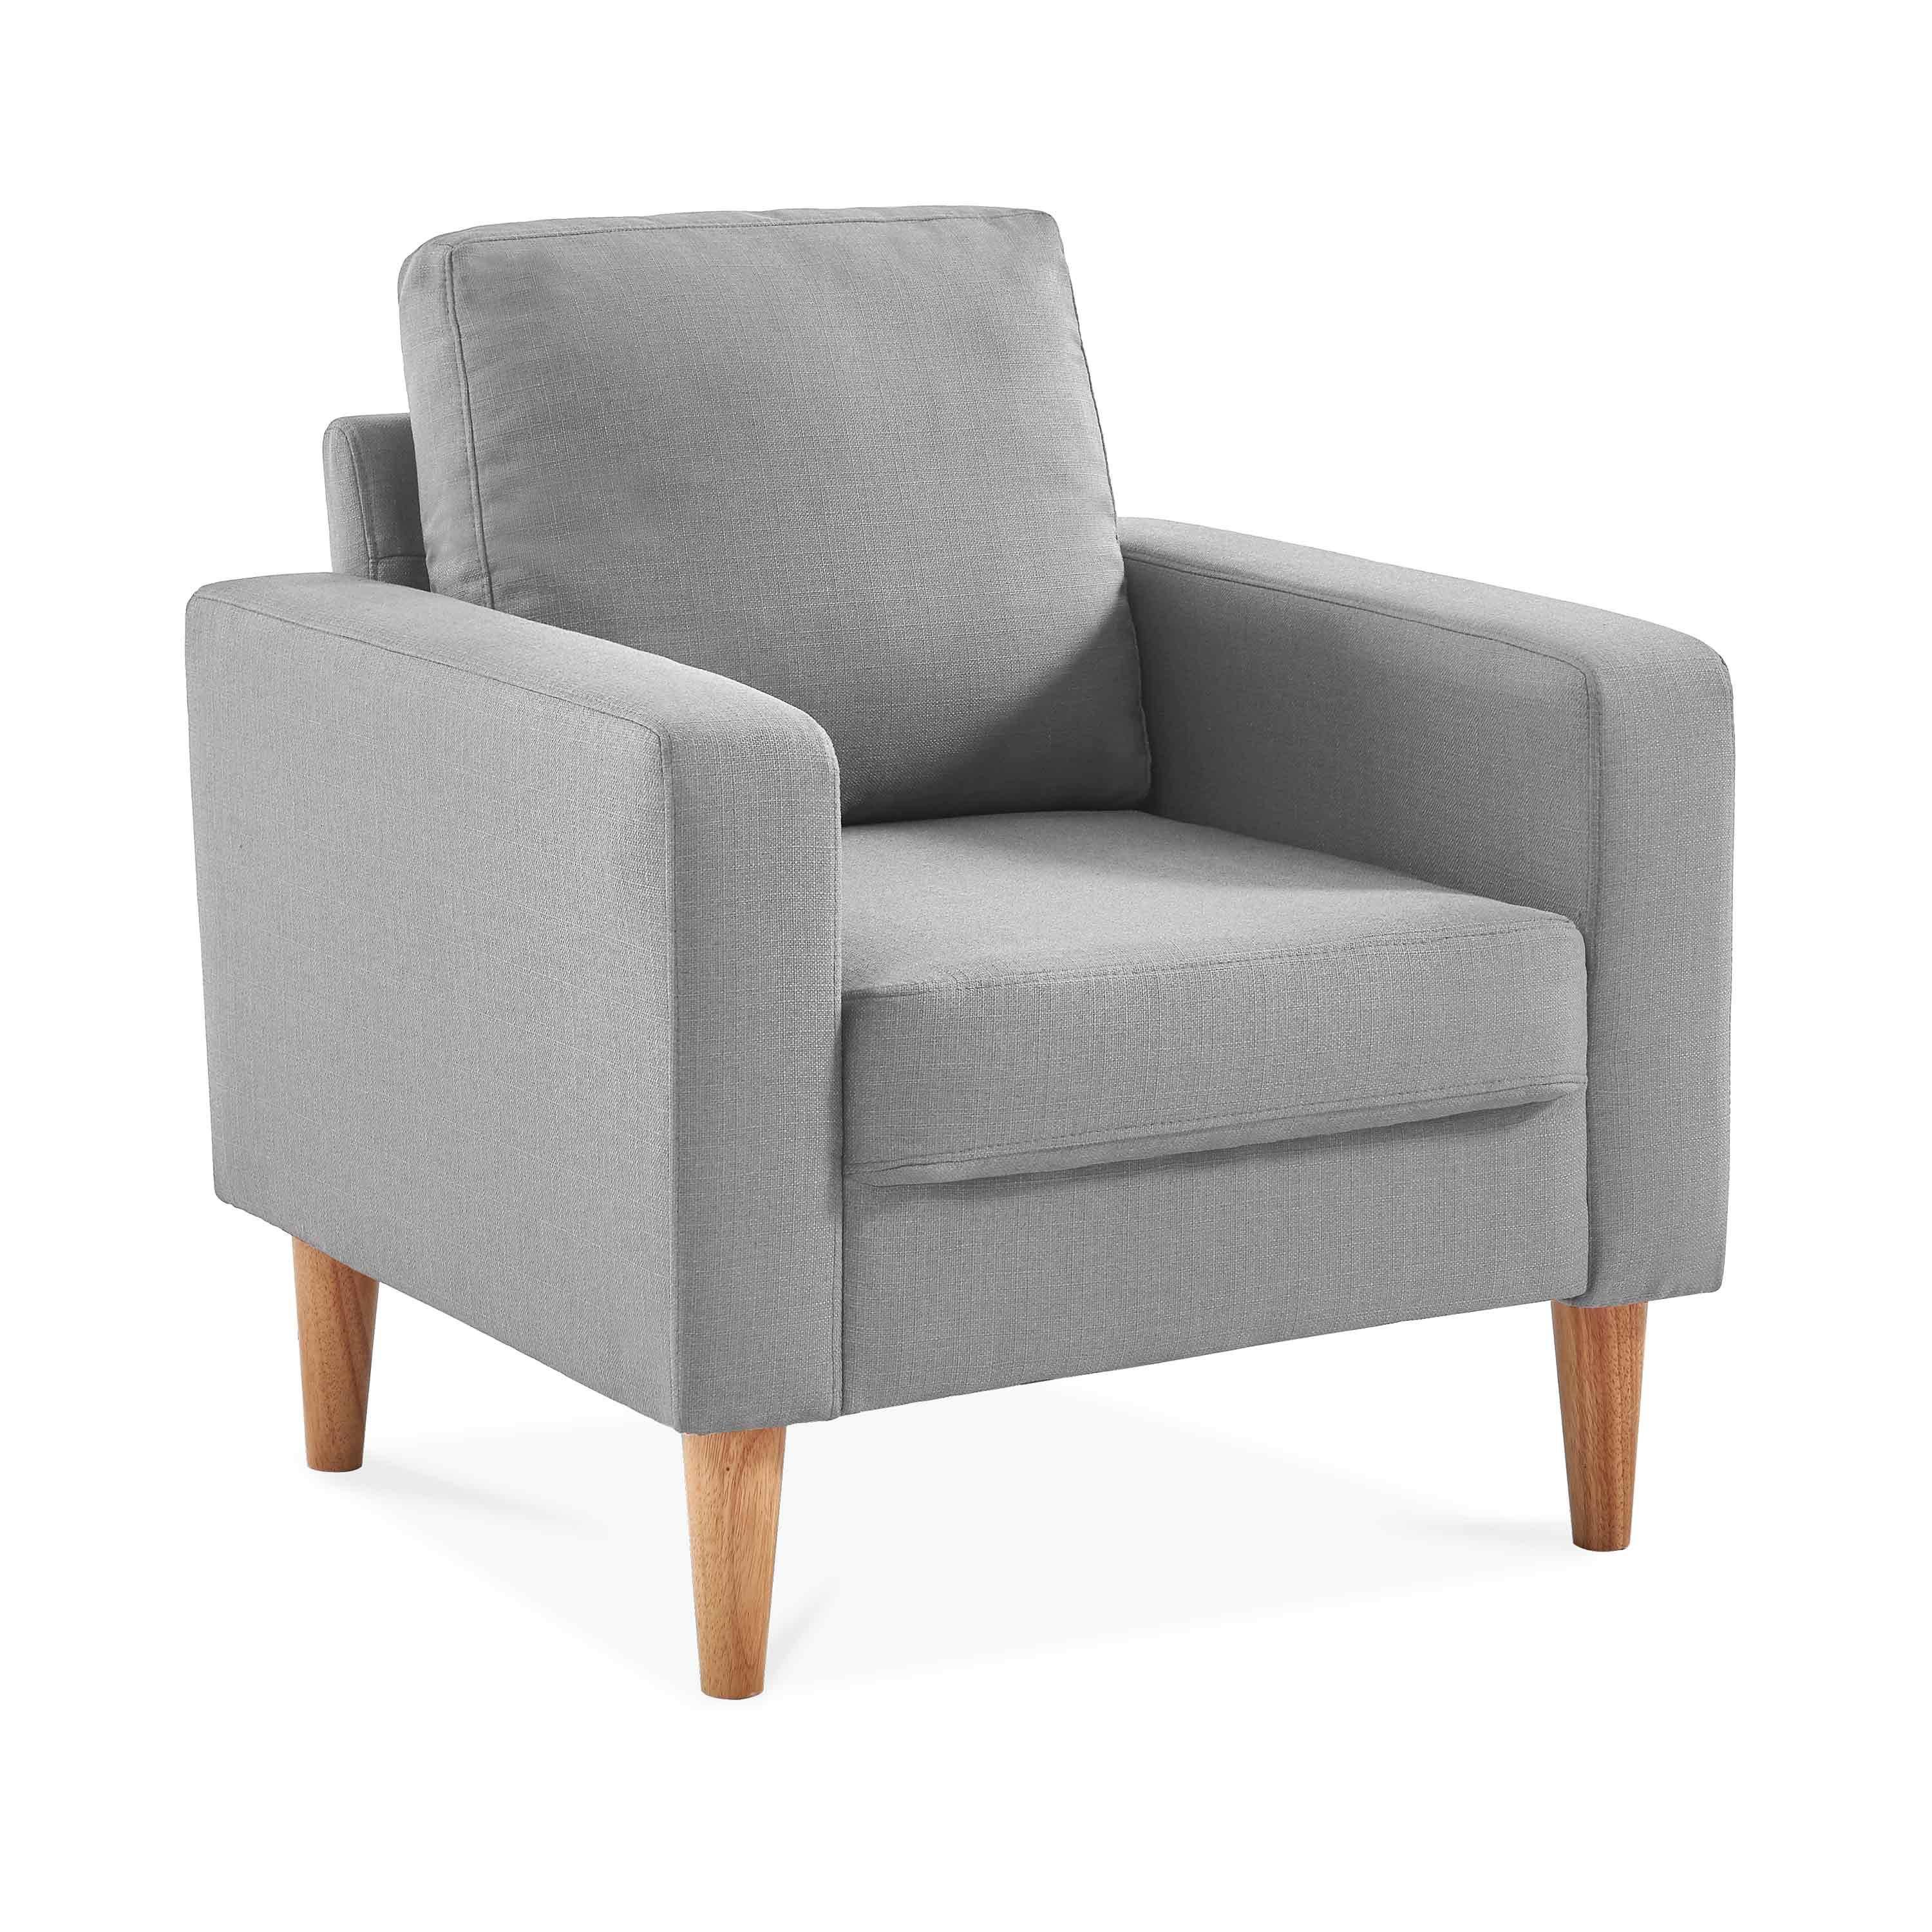 Scandi-style armchair with wooden legs - Bjorn - Light Grey,sweeek,Photo2